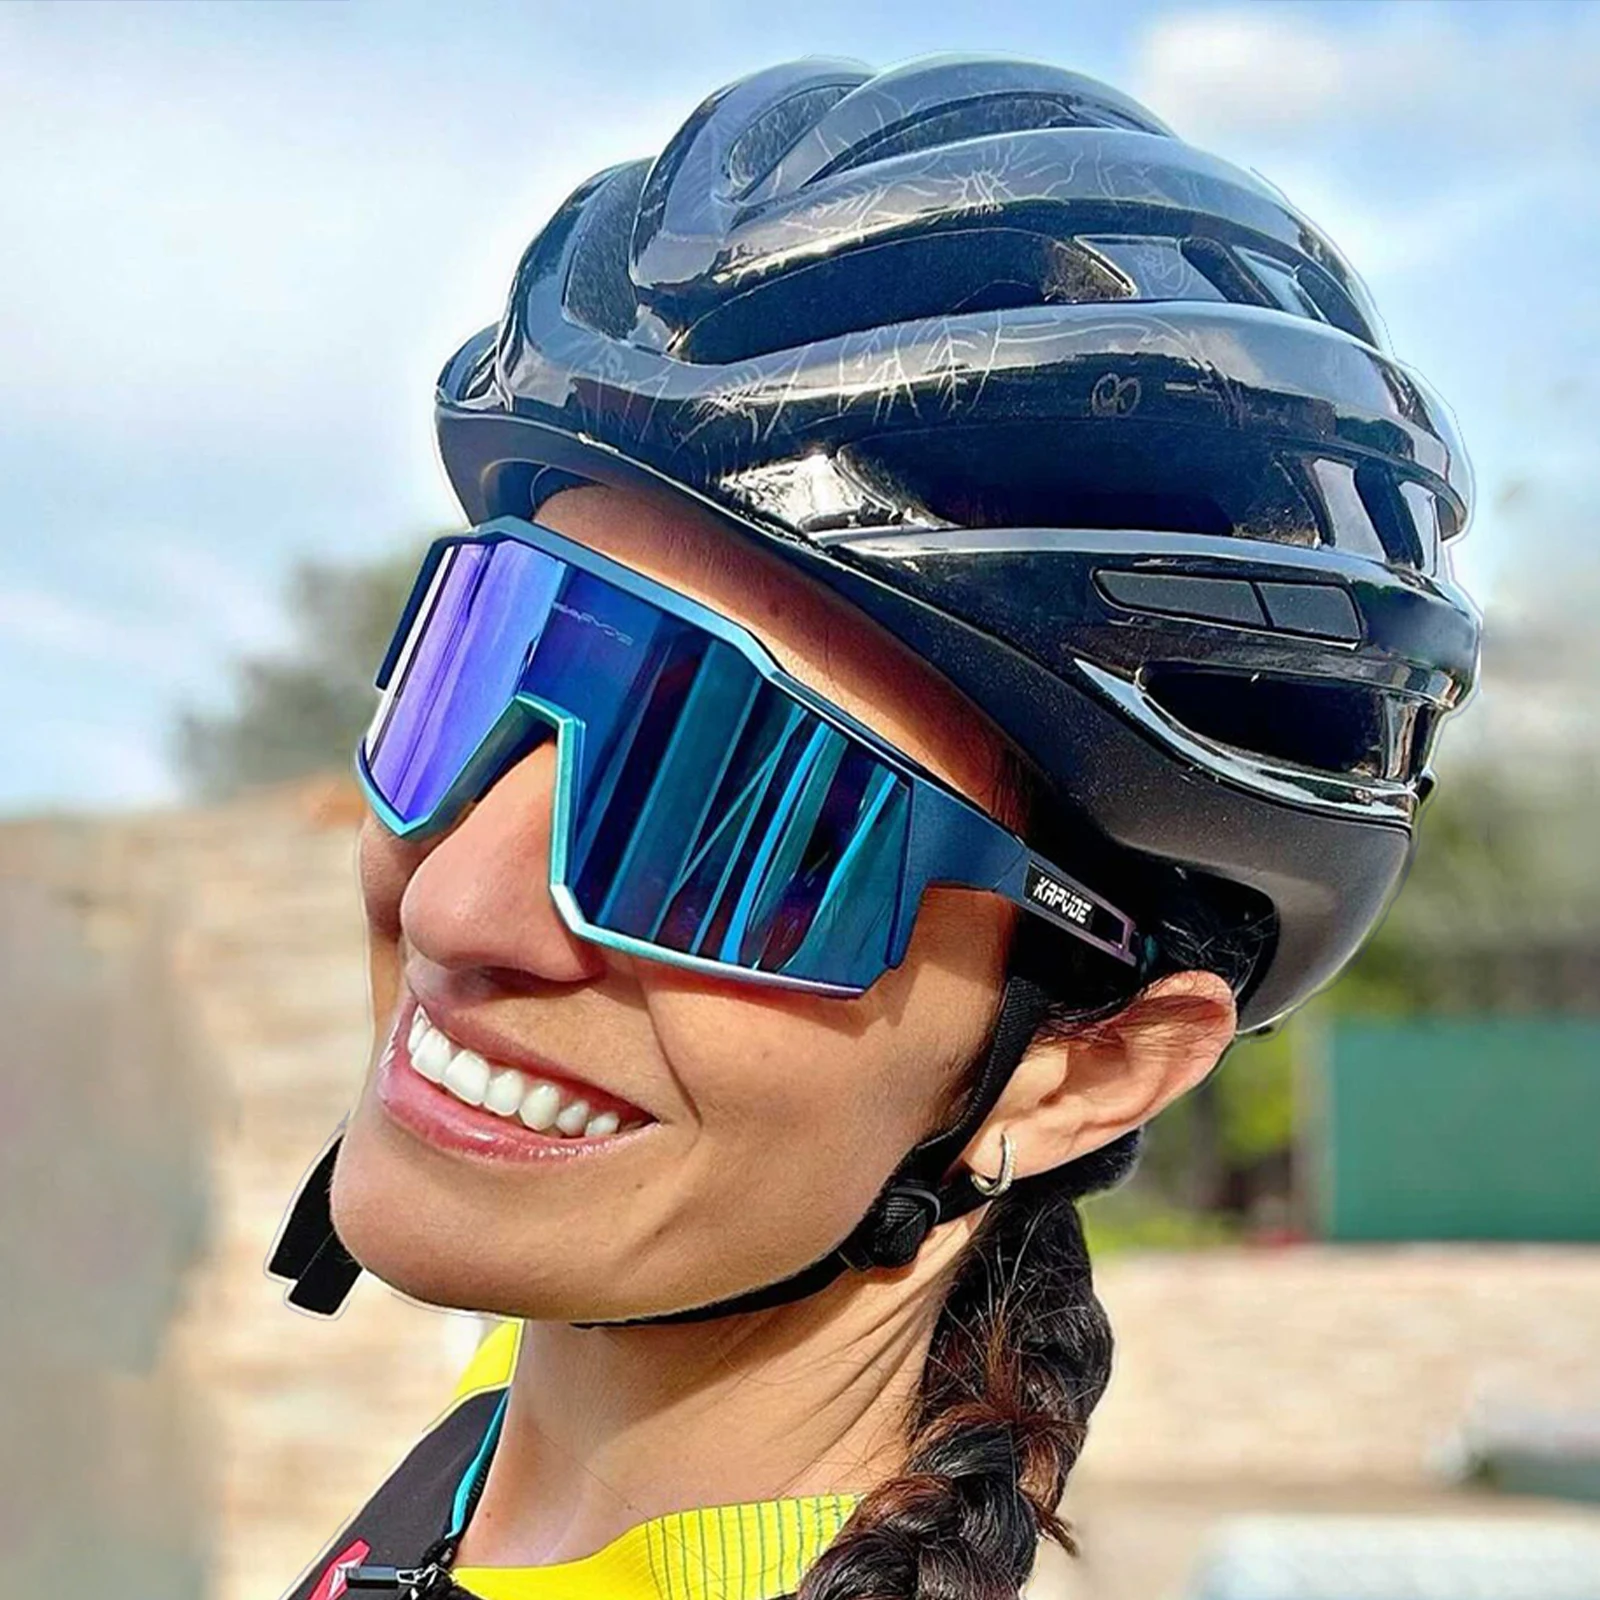 Kapvoe Polarized Sunglasses Cycling Glasses UV400 Goggles Sports Eyewear 4lens